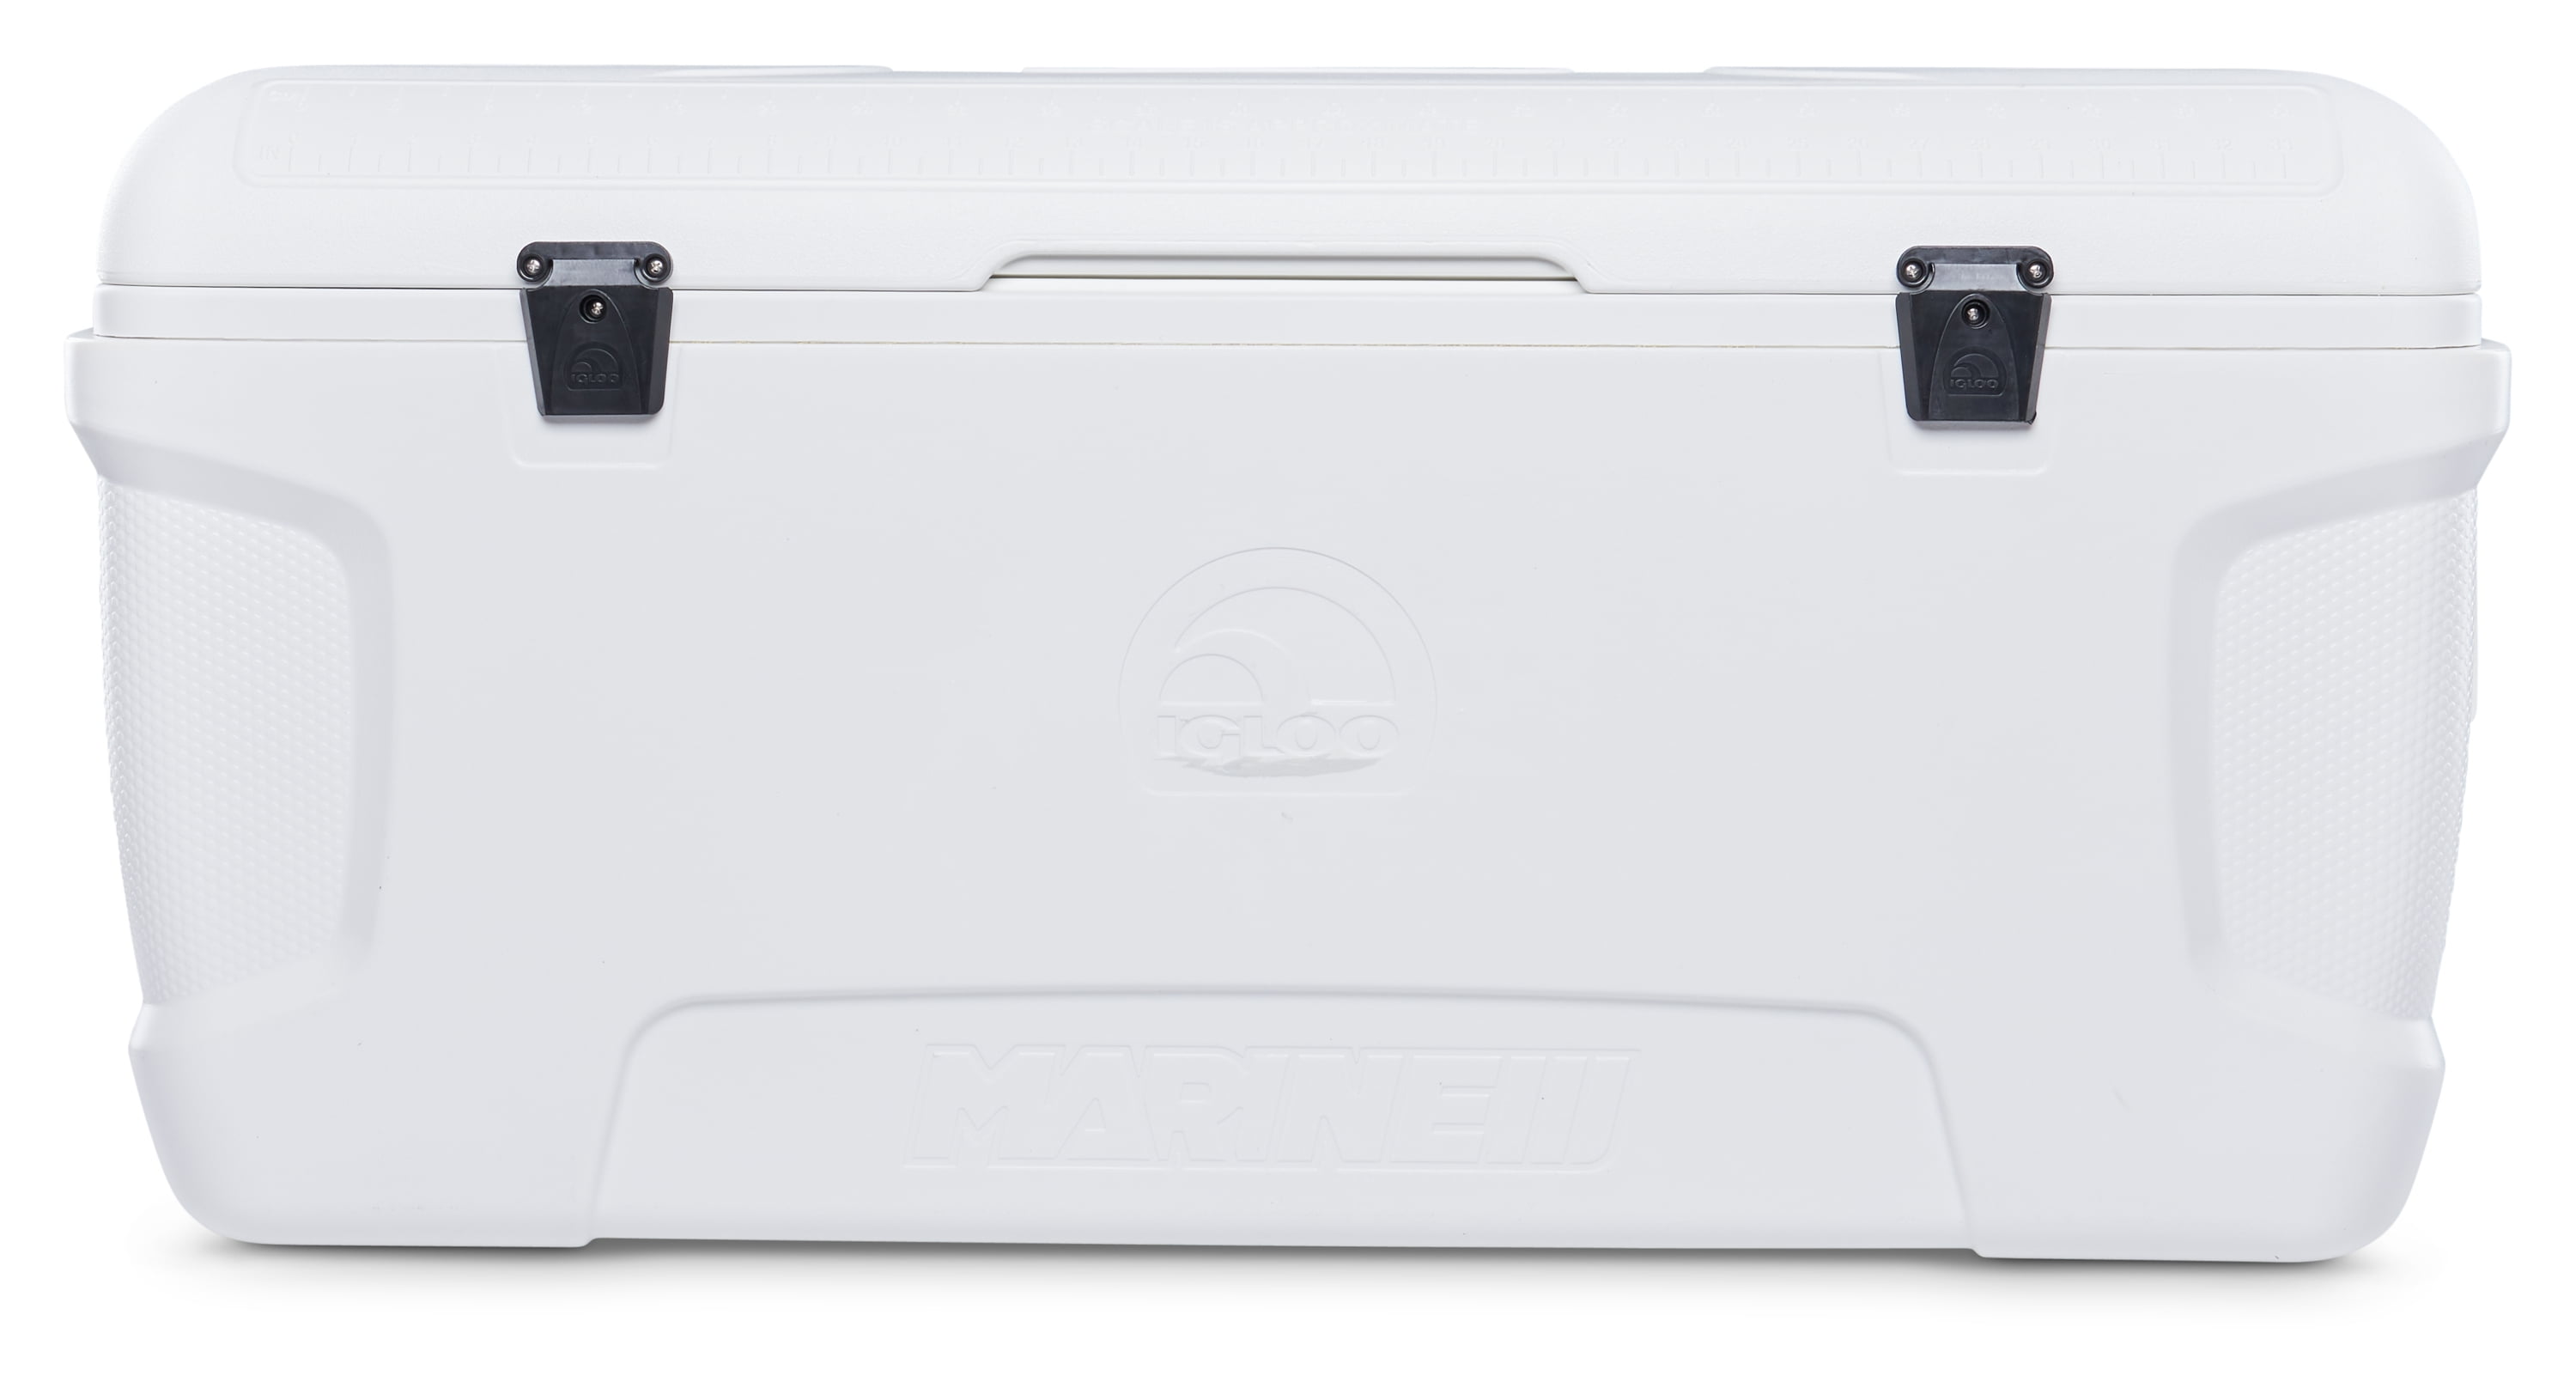 Igloo 150 Quart Marine Cooler - White 